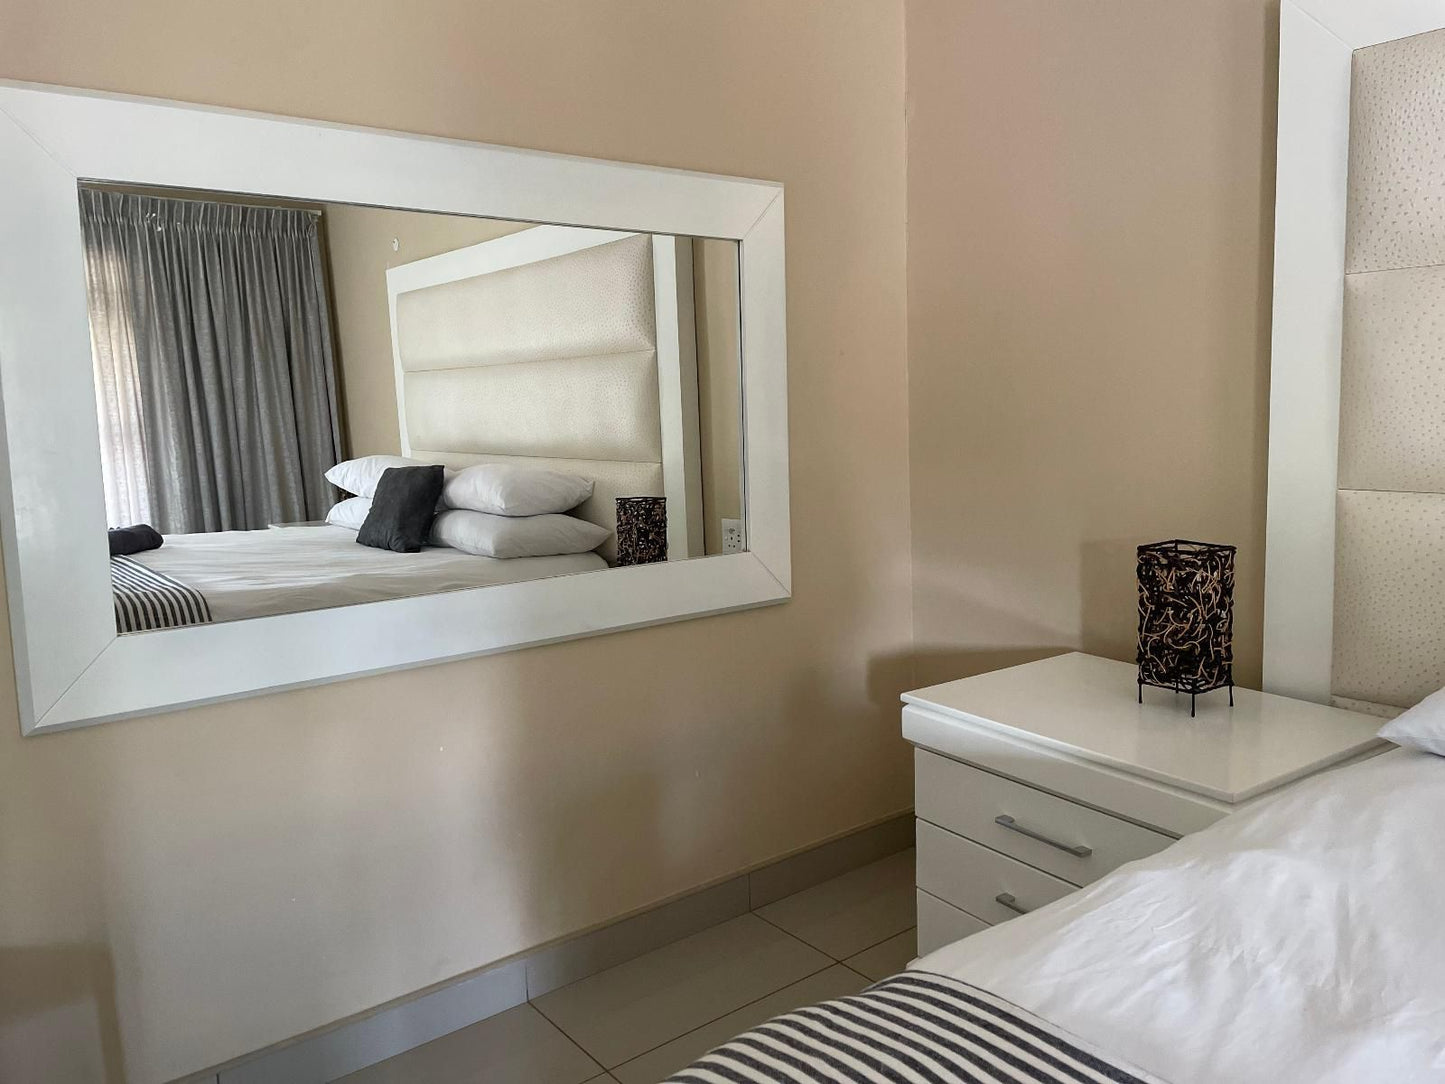 1 Oak Lodge Thohoyandou Limpopo Province South Africa Bedroom